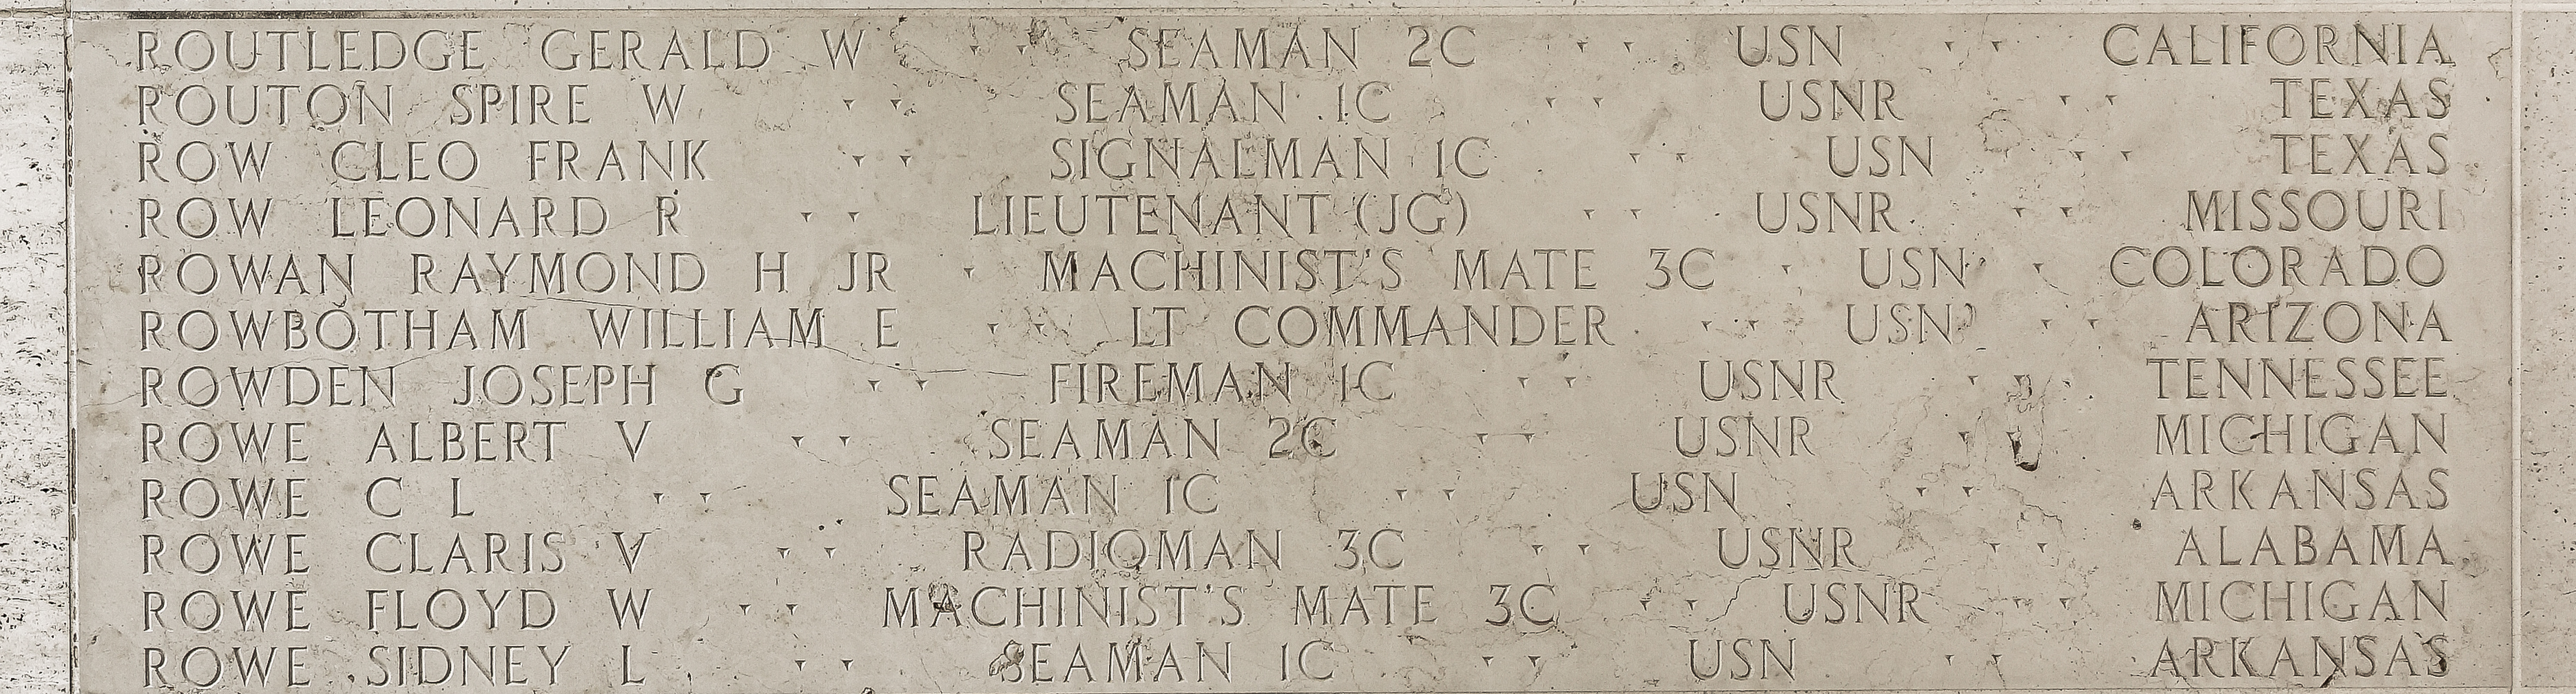 William E. Rowbotham, Lieutenant Commander